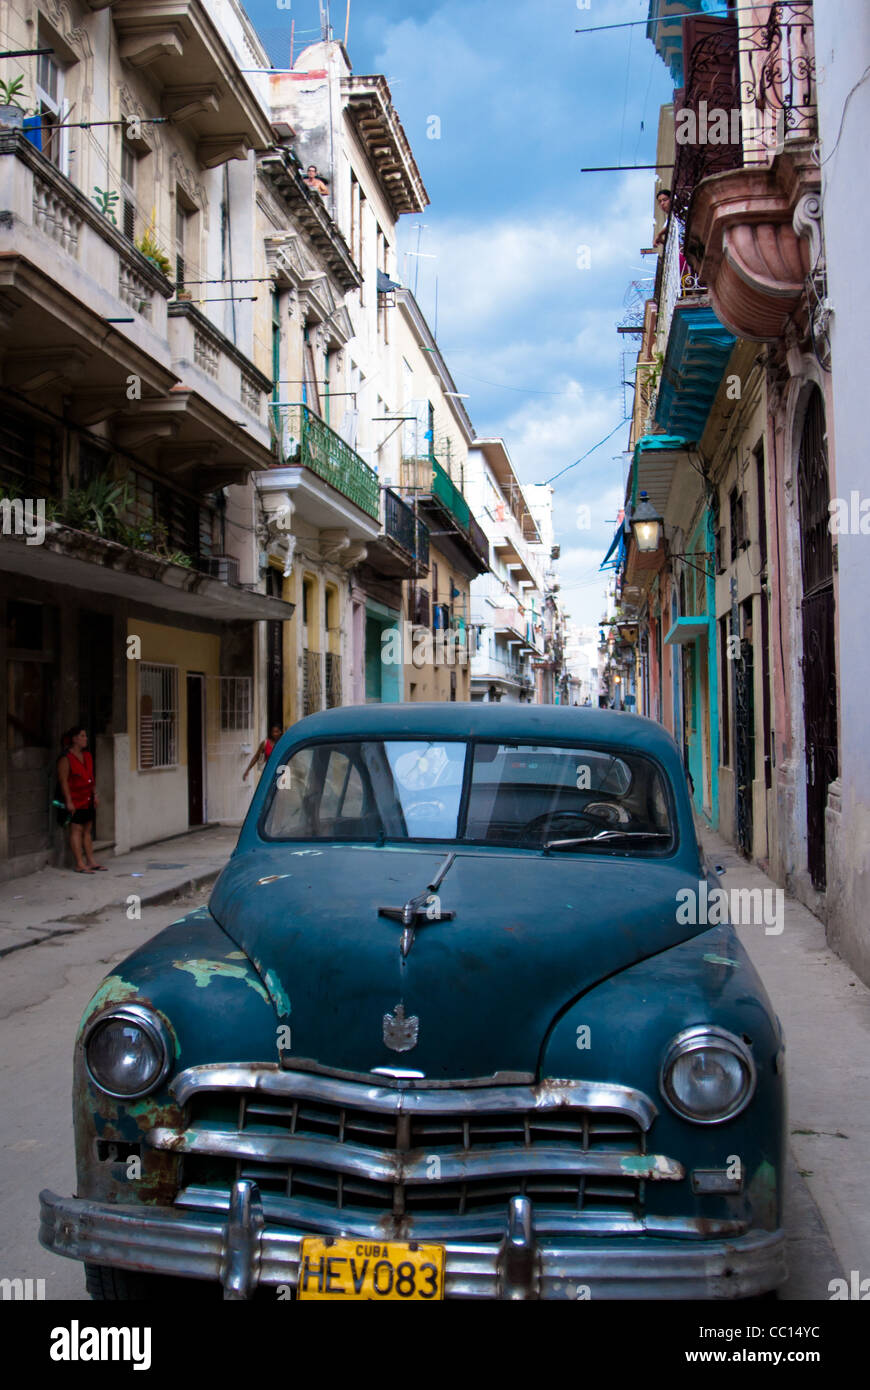 Rusty old American Car in the street of Havana, Cuba Stock Photo